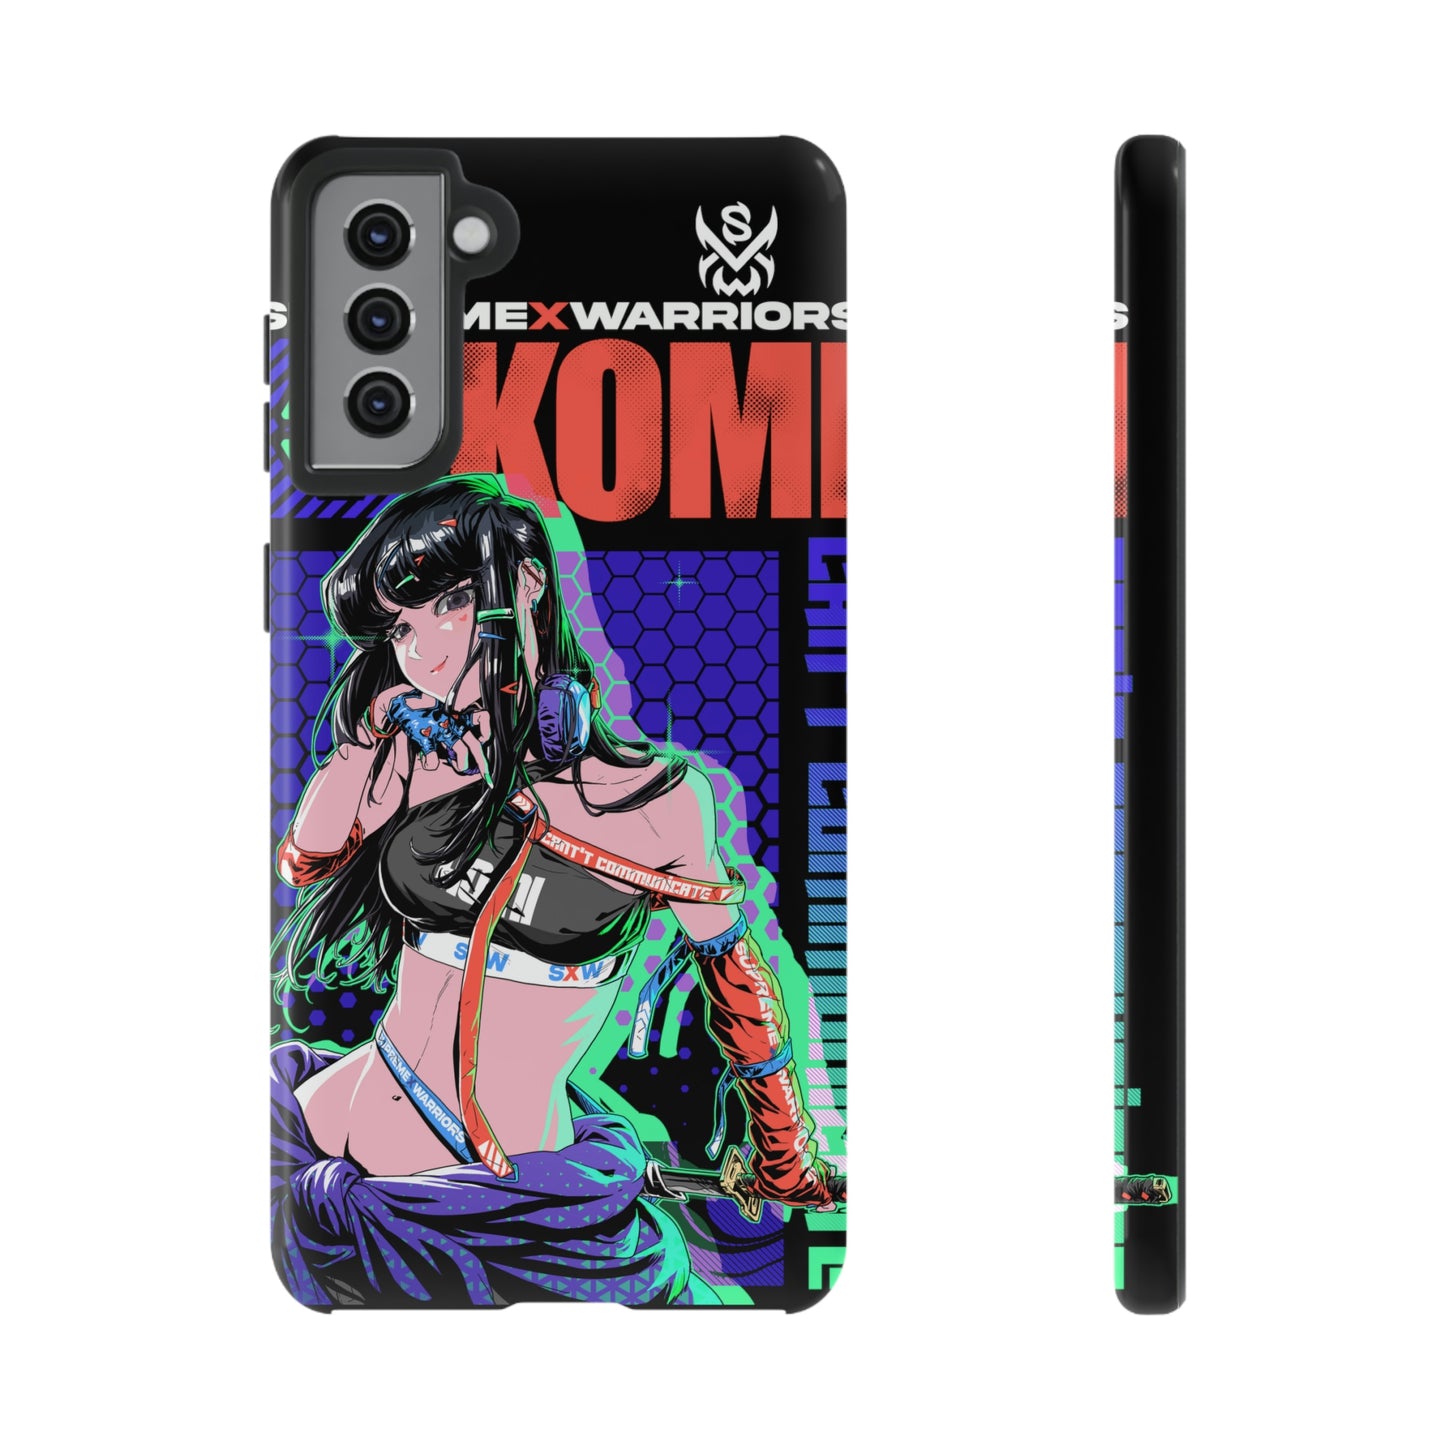 Komi / Samsung Galaxy Cases - LIMITED